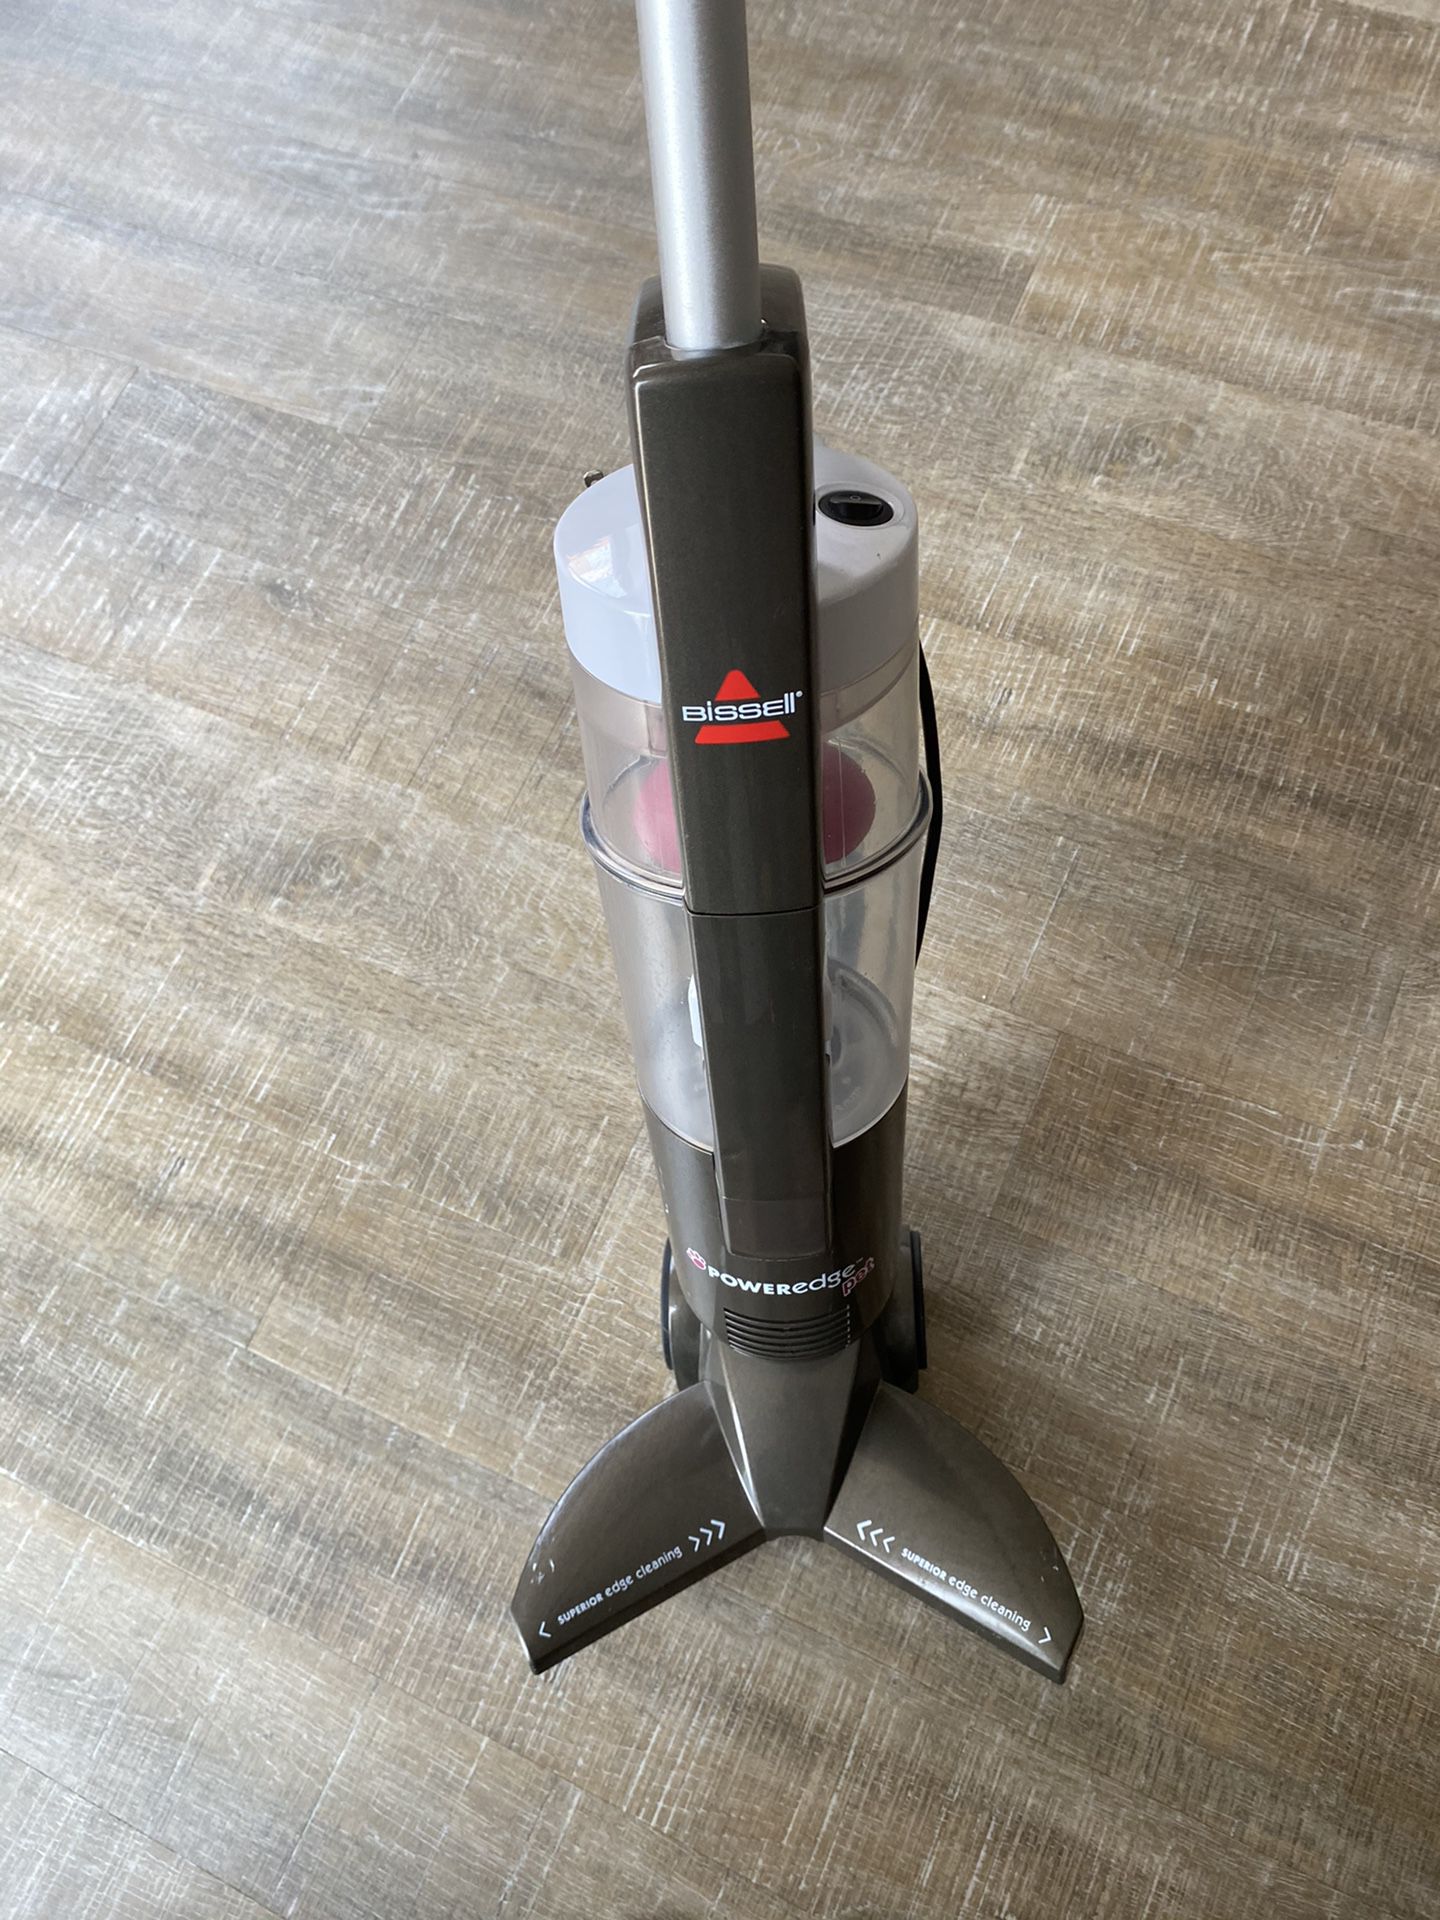 Bissell Poweredge Pet Hardwood bagless vacuum cleaner